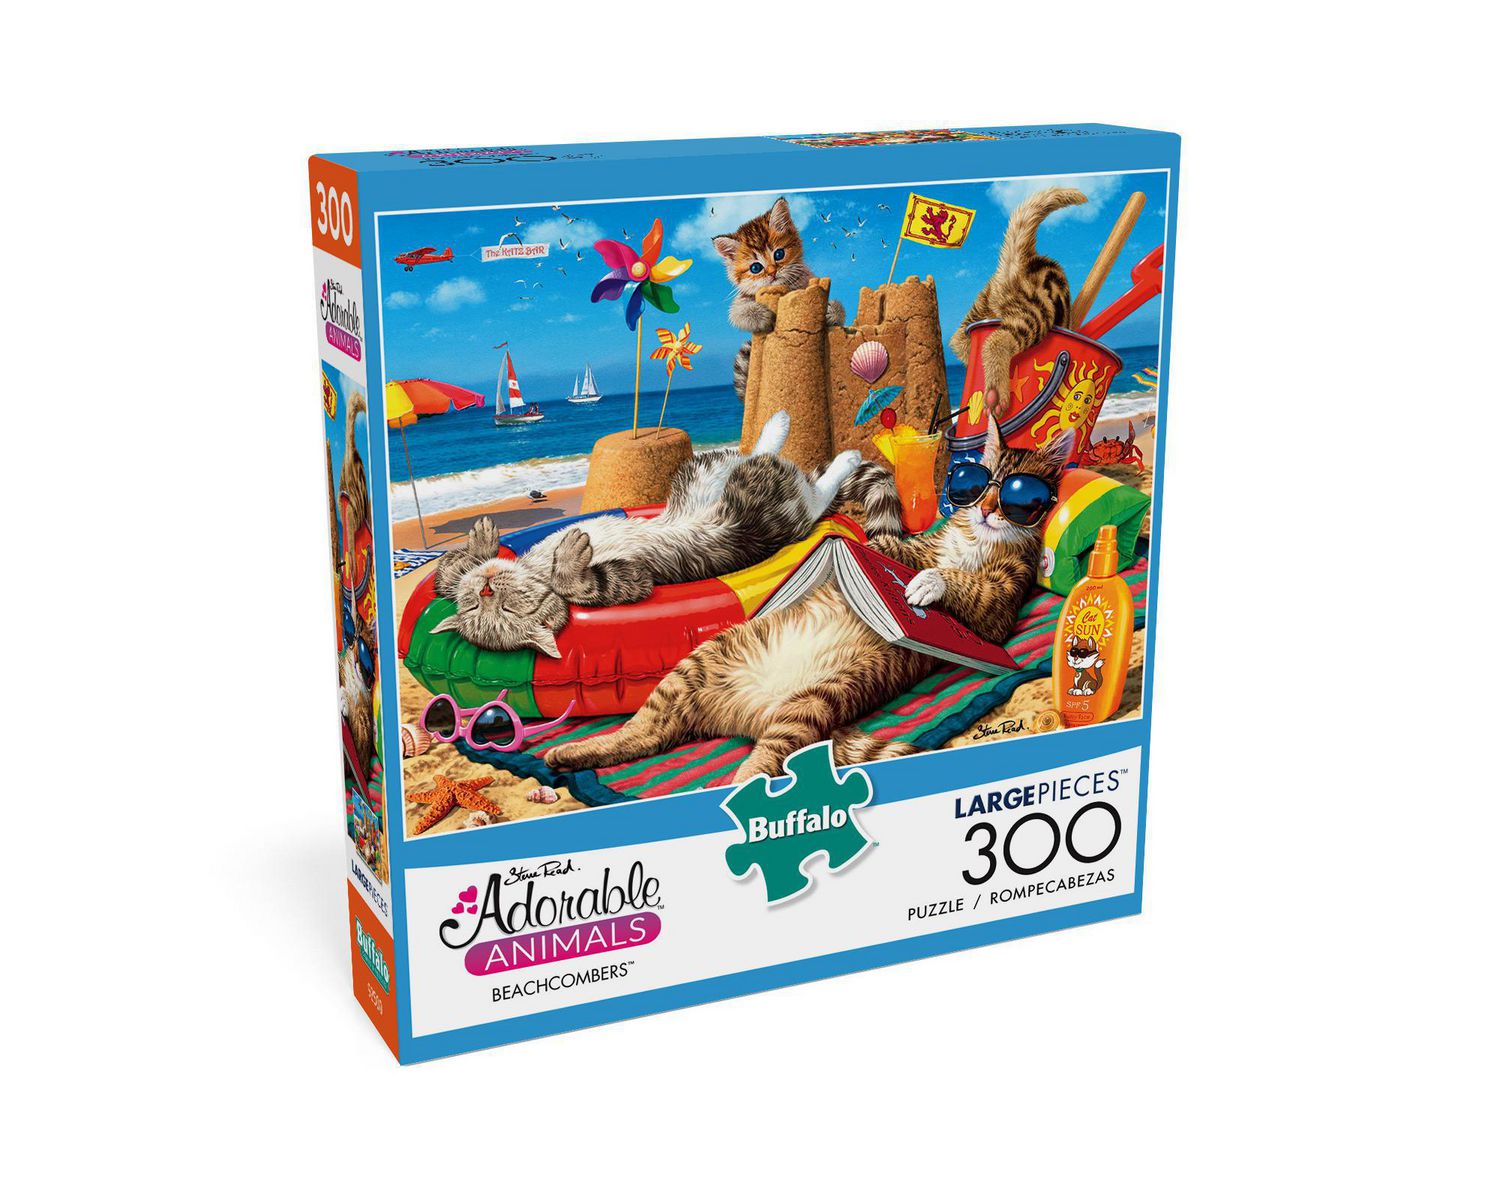 Buffalo Games - Adorable Animals - Beachcombers - 300 Piece Jigsaw Puzzle